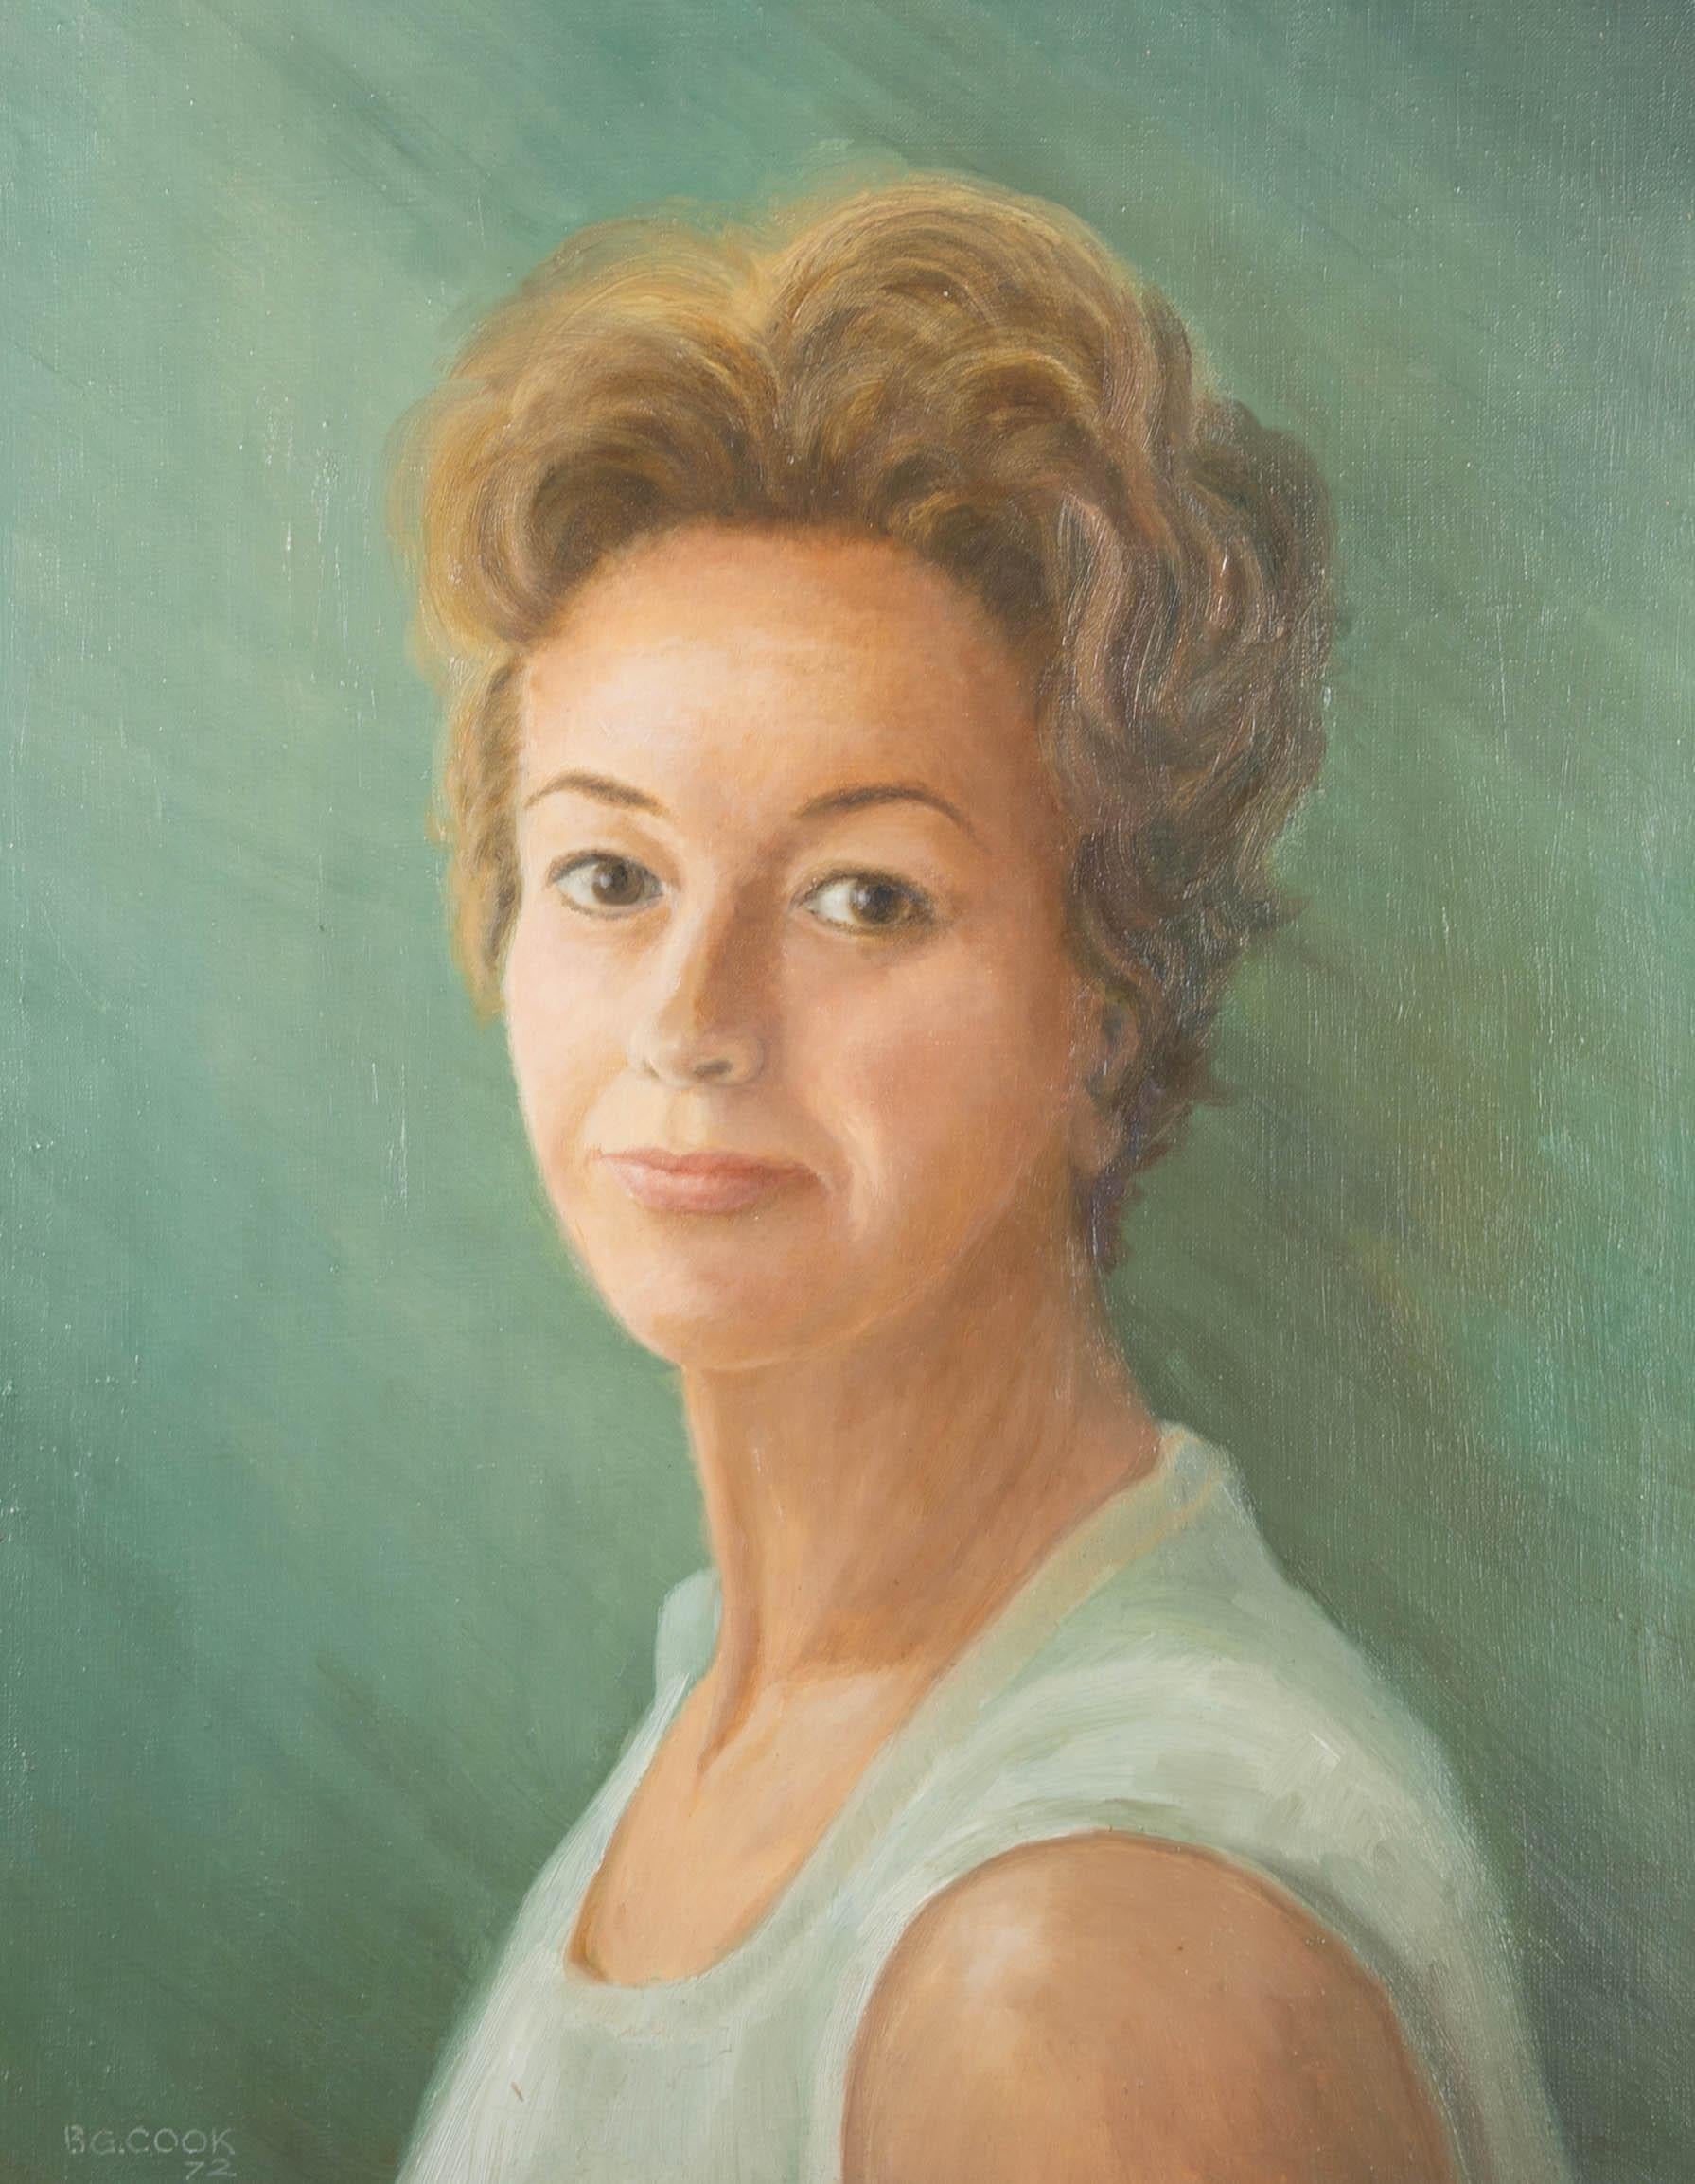 B.G. Cook - 1972 Oil, Female Portrait For Sale 1